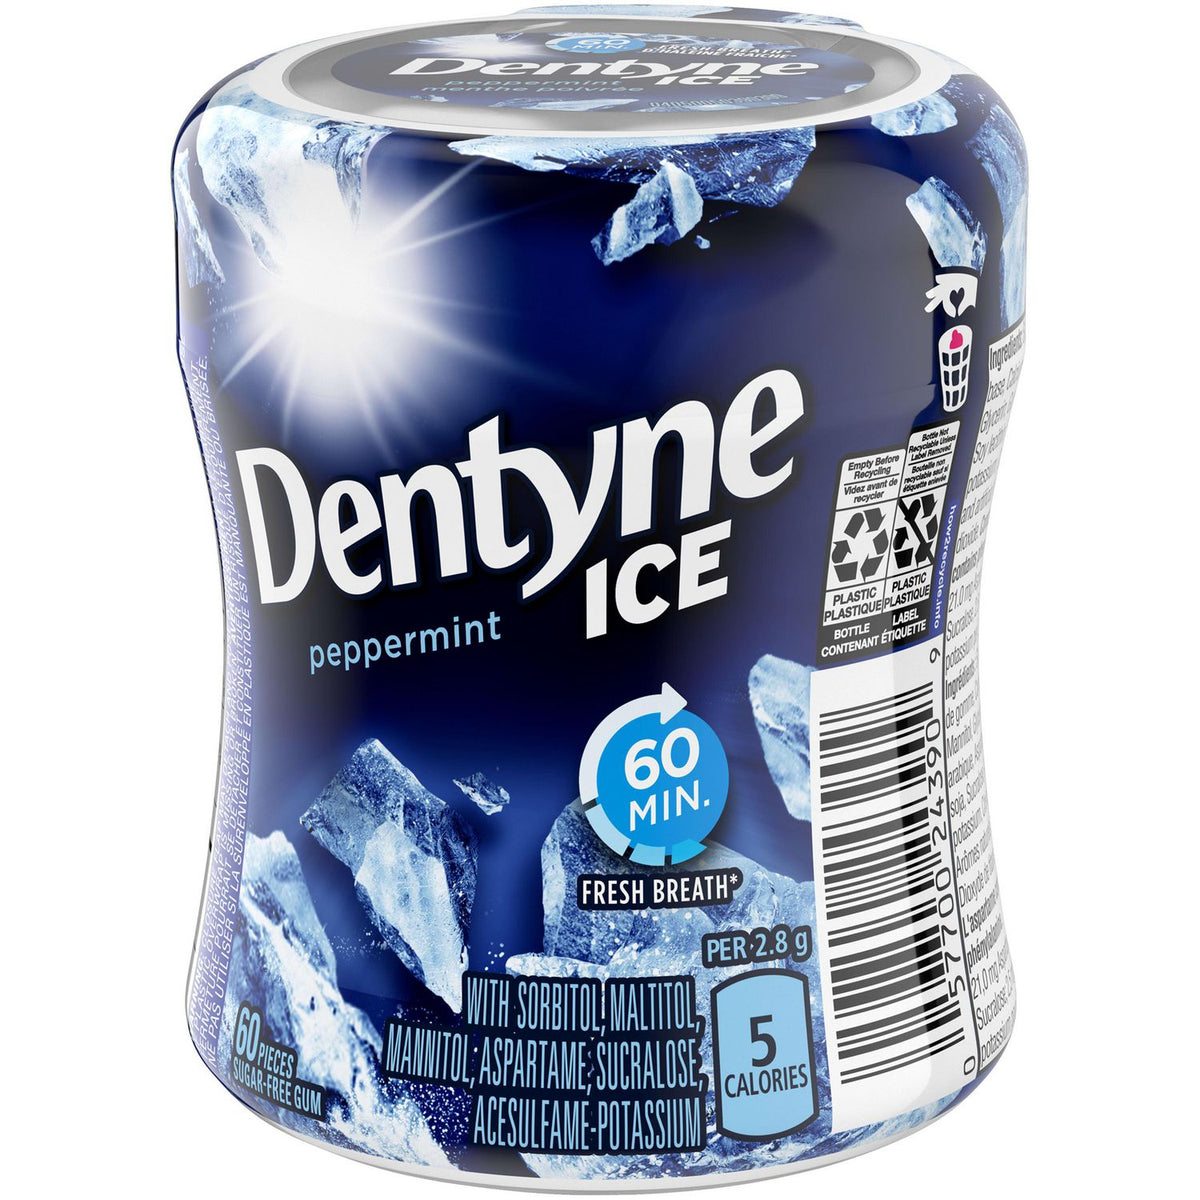 Dentyne Ice Peppermint 60 Piece Gum Bottle